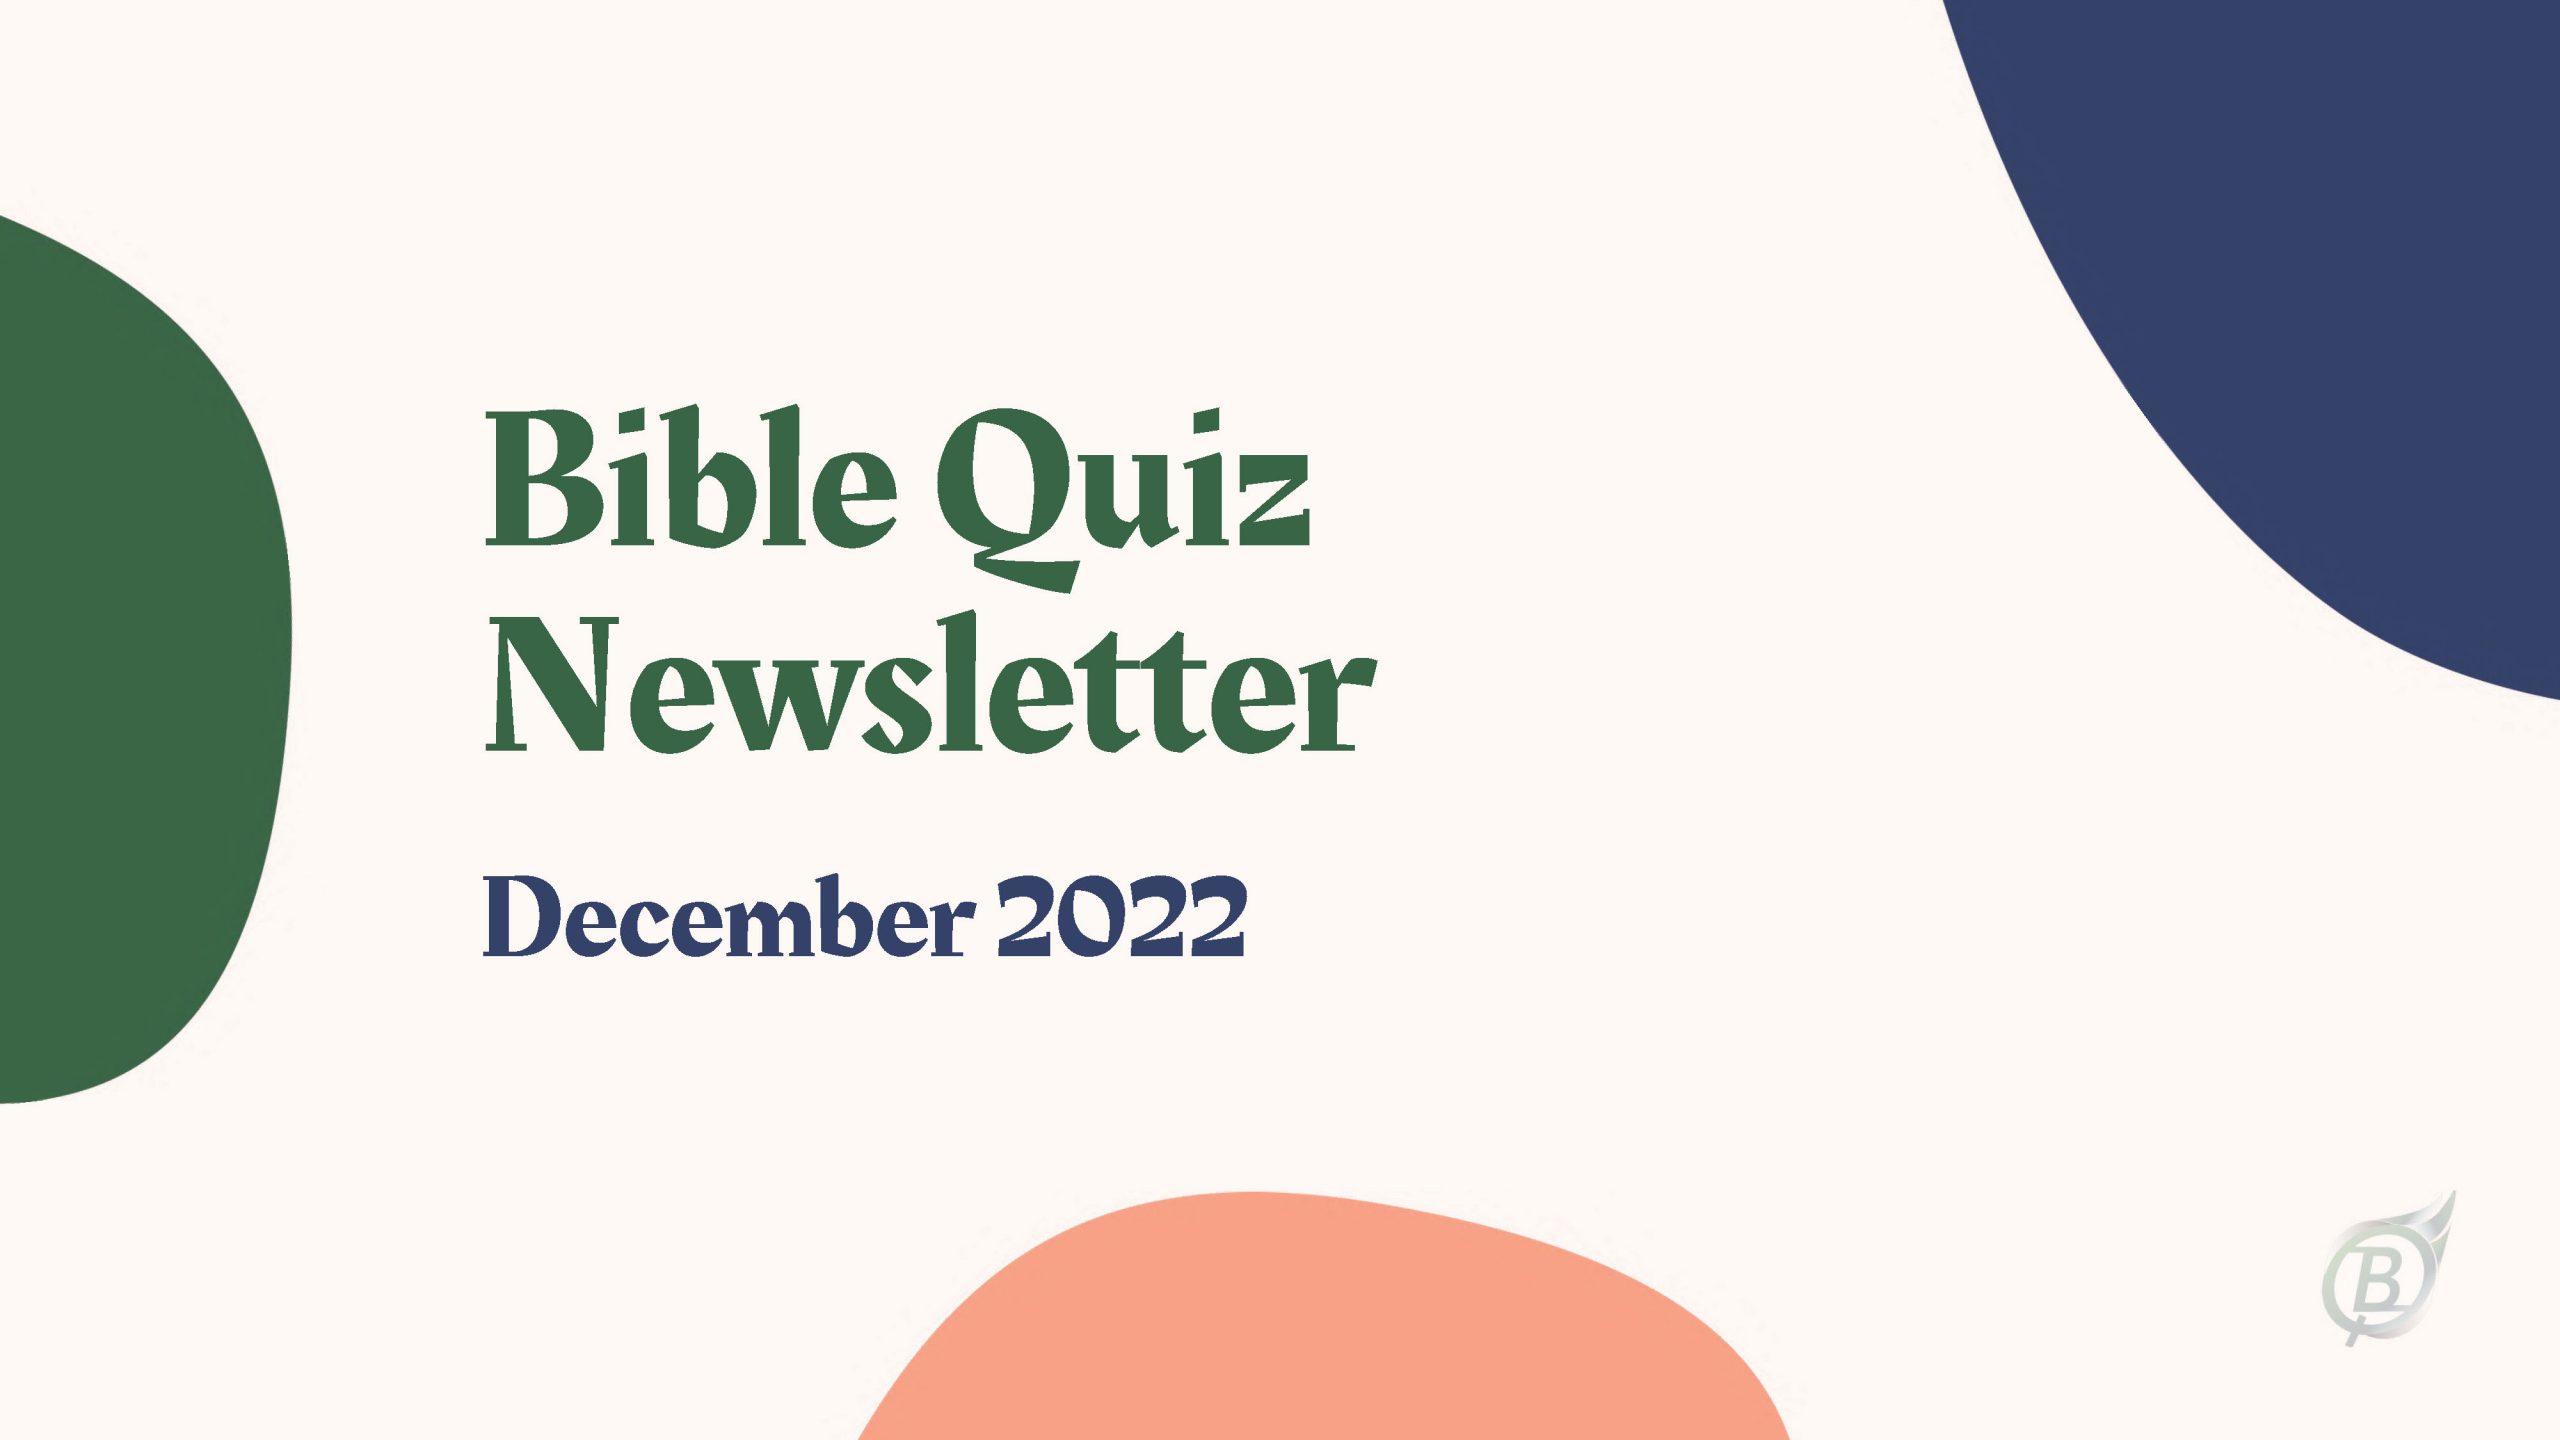 Bible Quiz Newsletter - December 2022